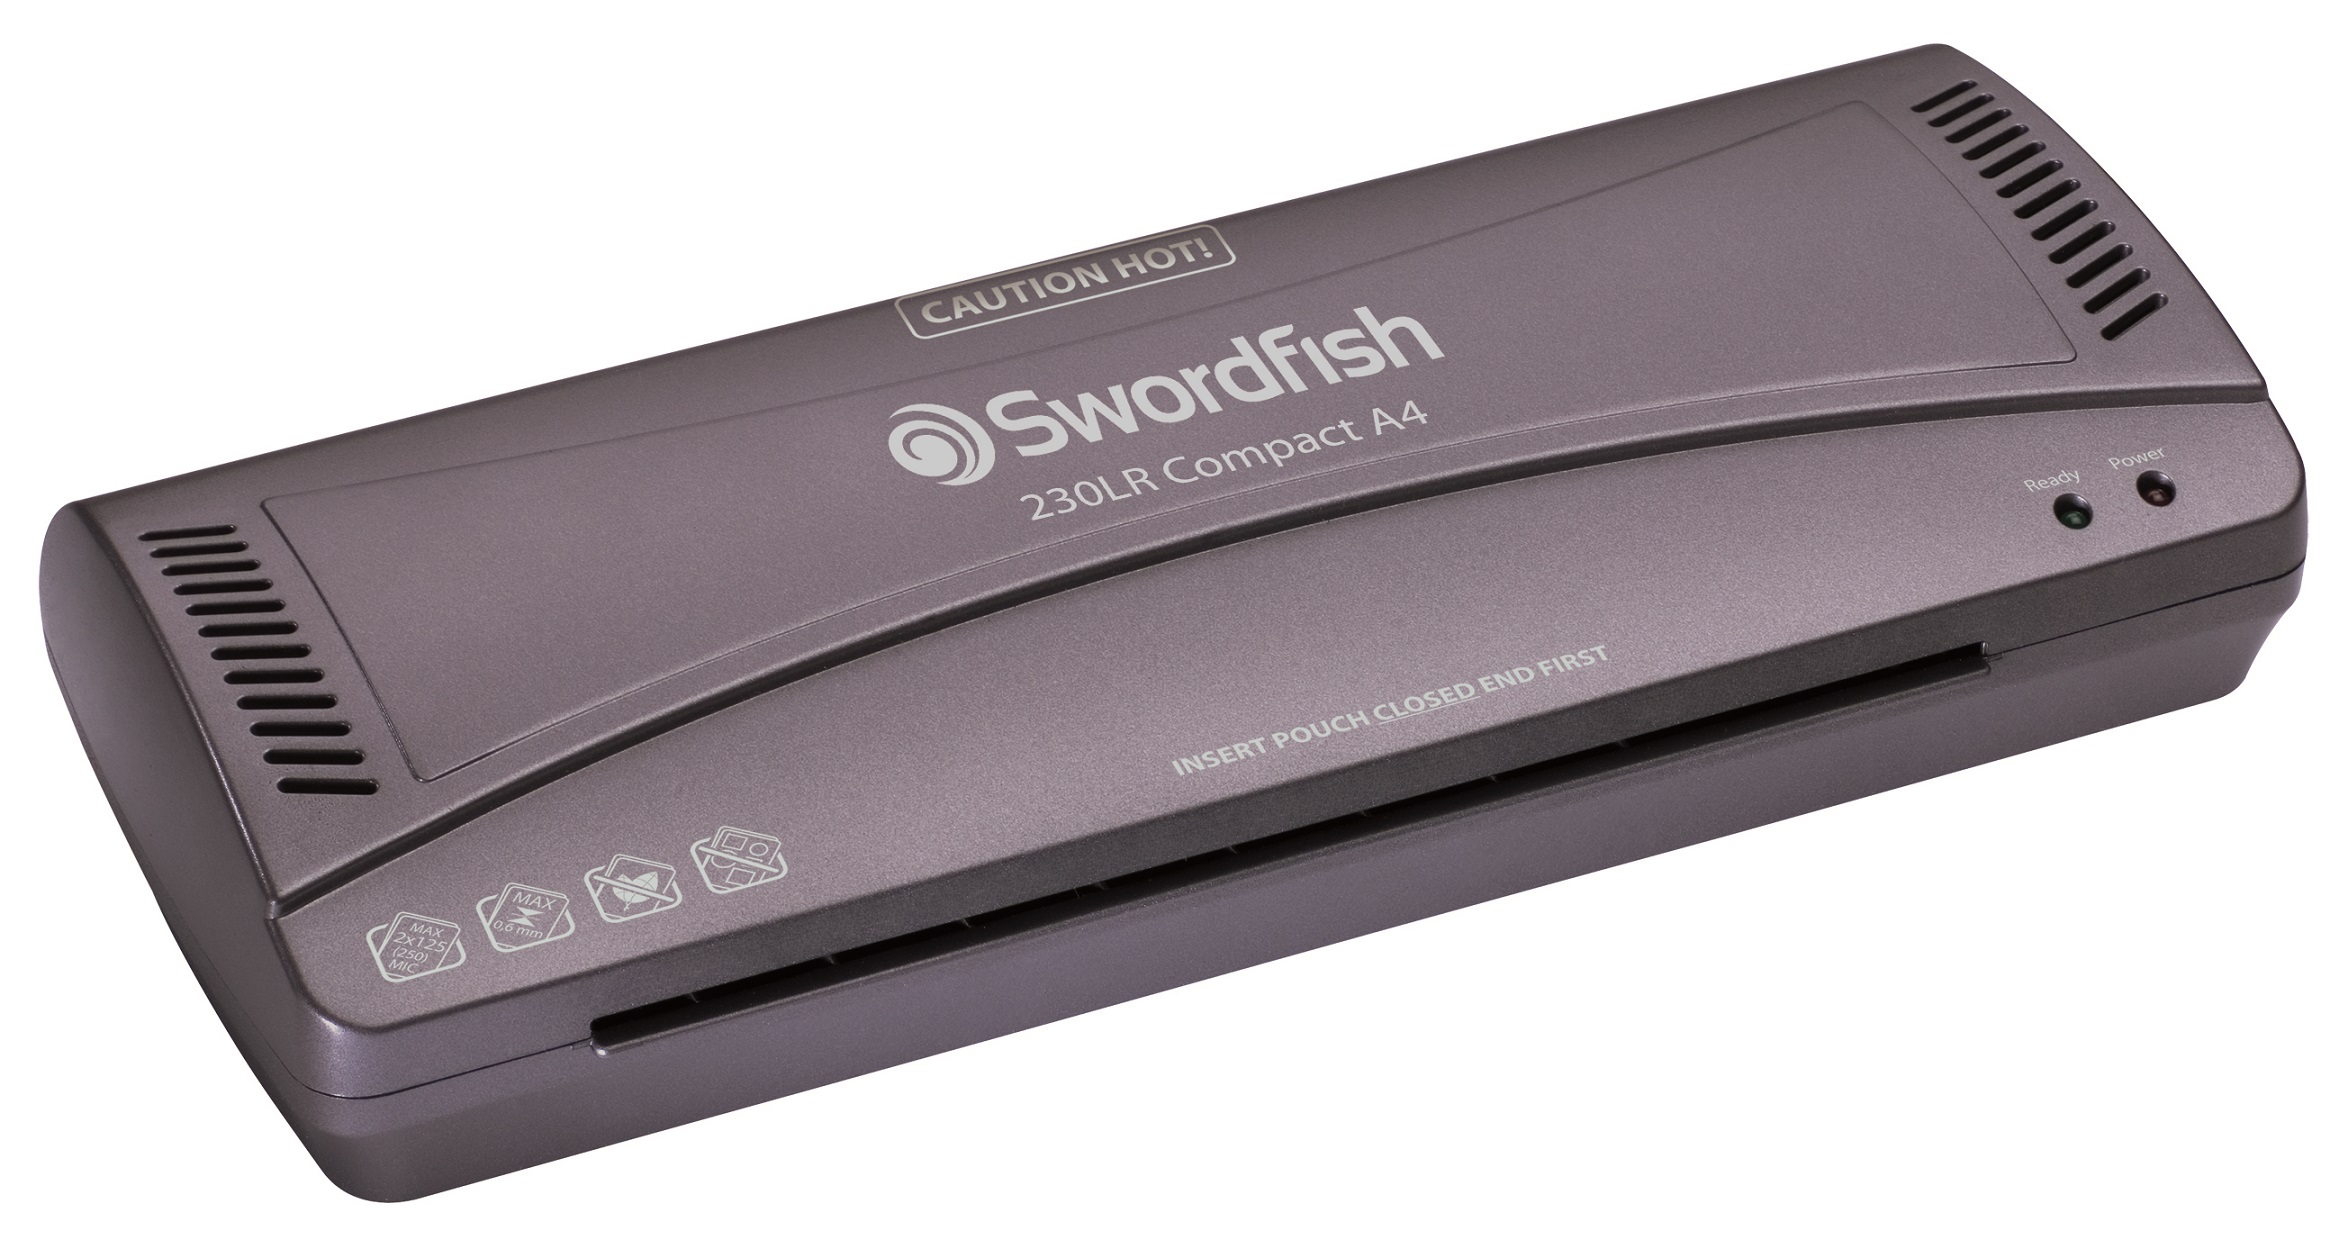 Swordfish 230LR Compact A4 Laminator Silver